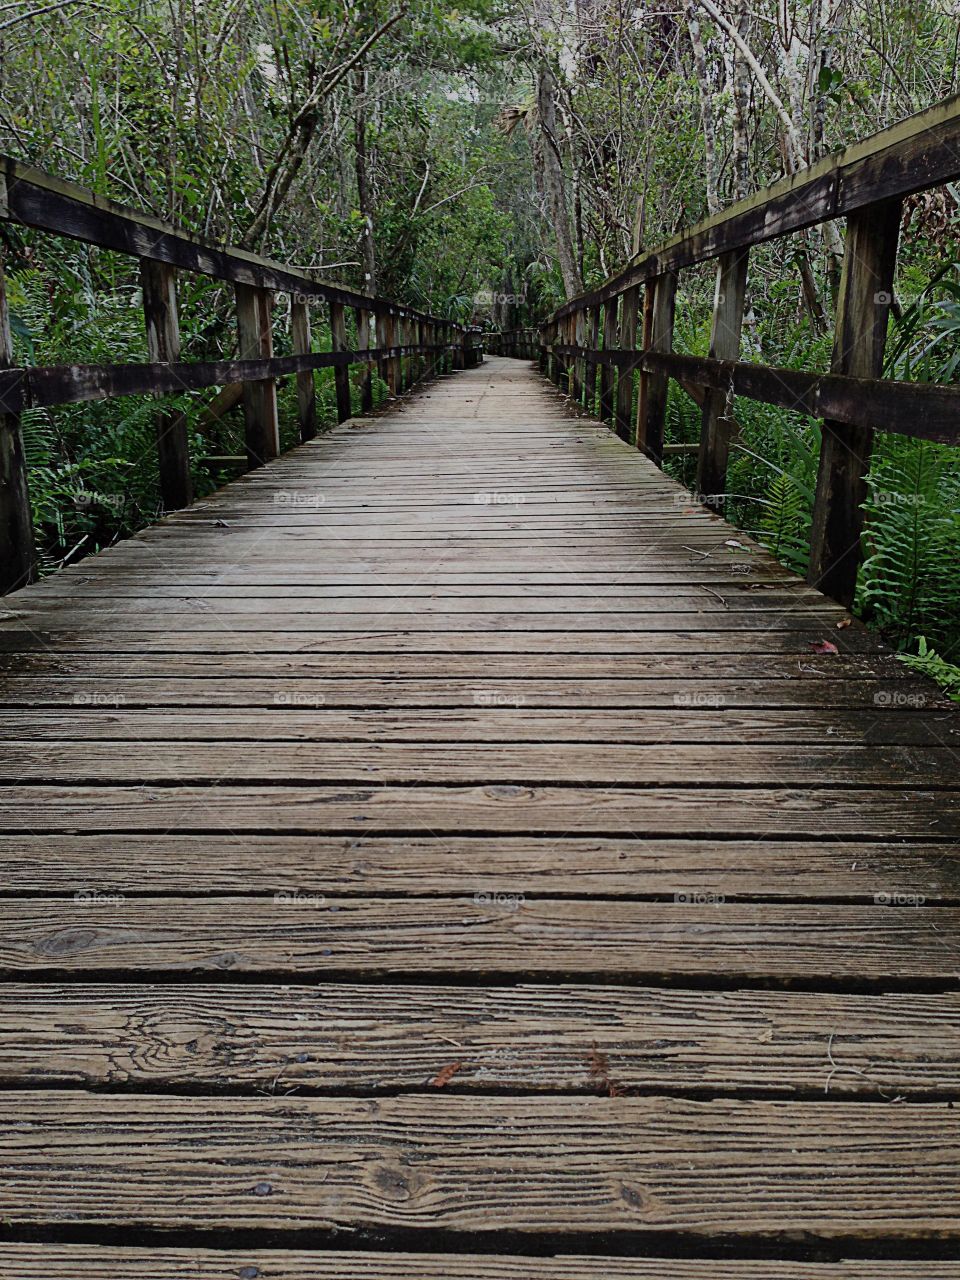 A mysterious boardwalk through the Everglades jungle.